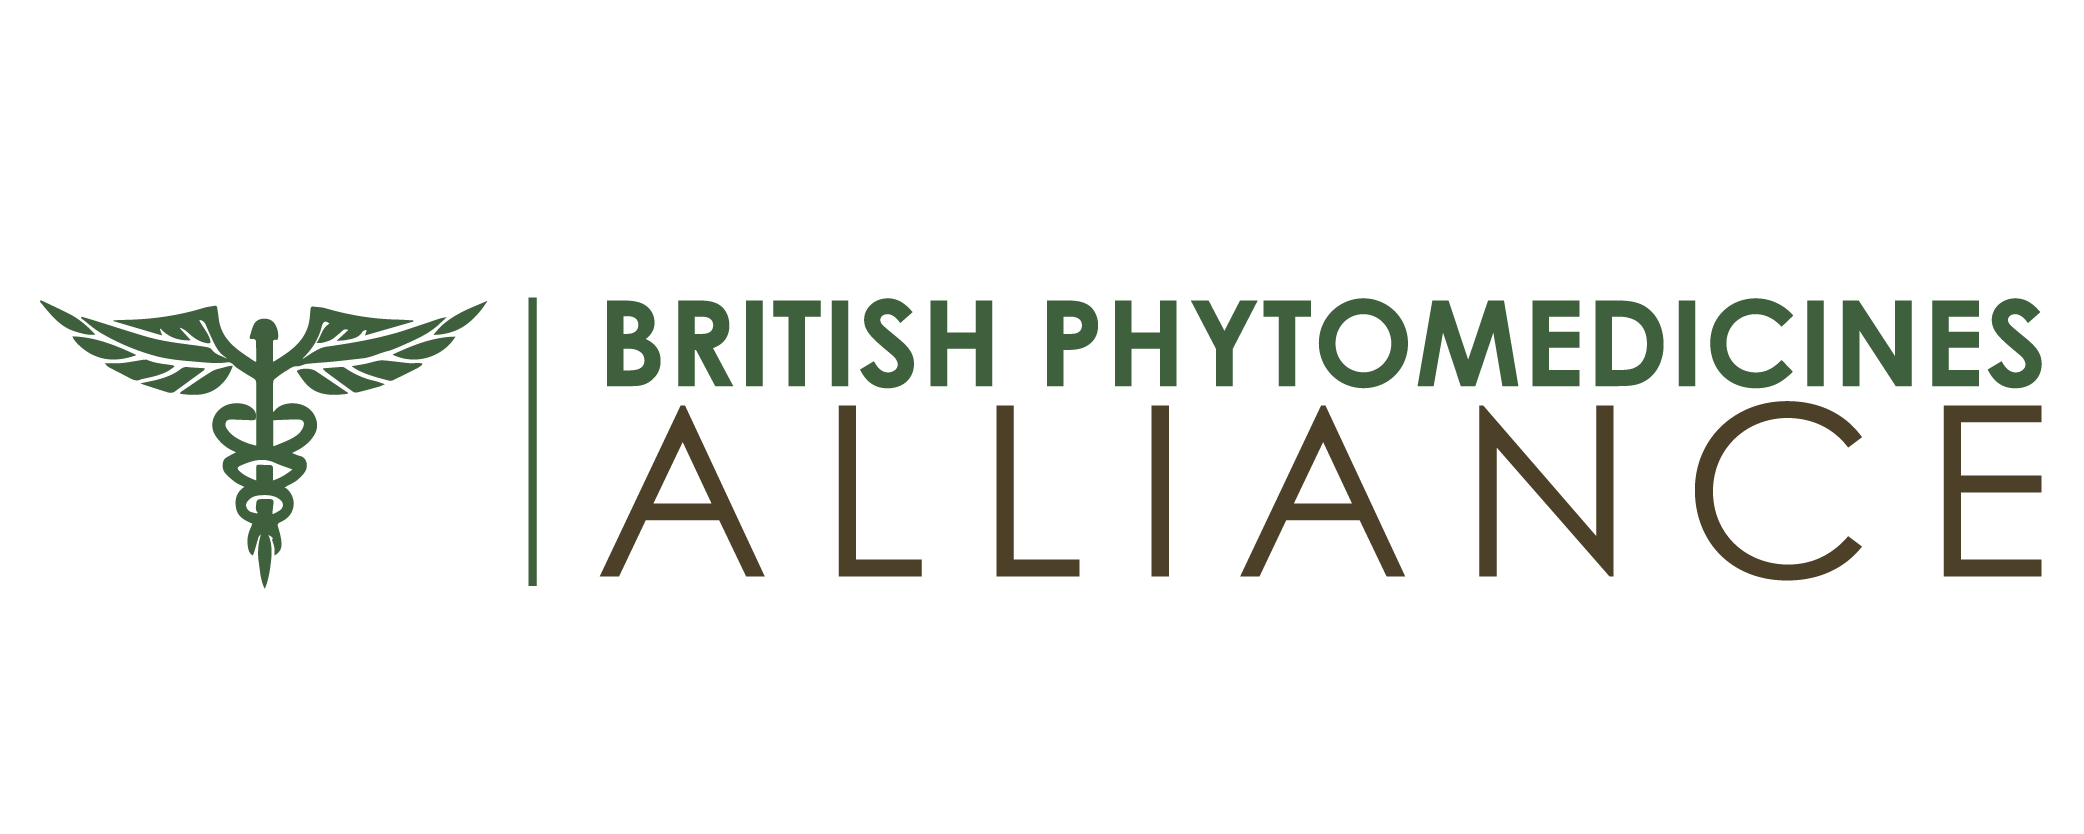 British Phytomedicines Alliance